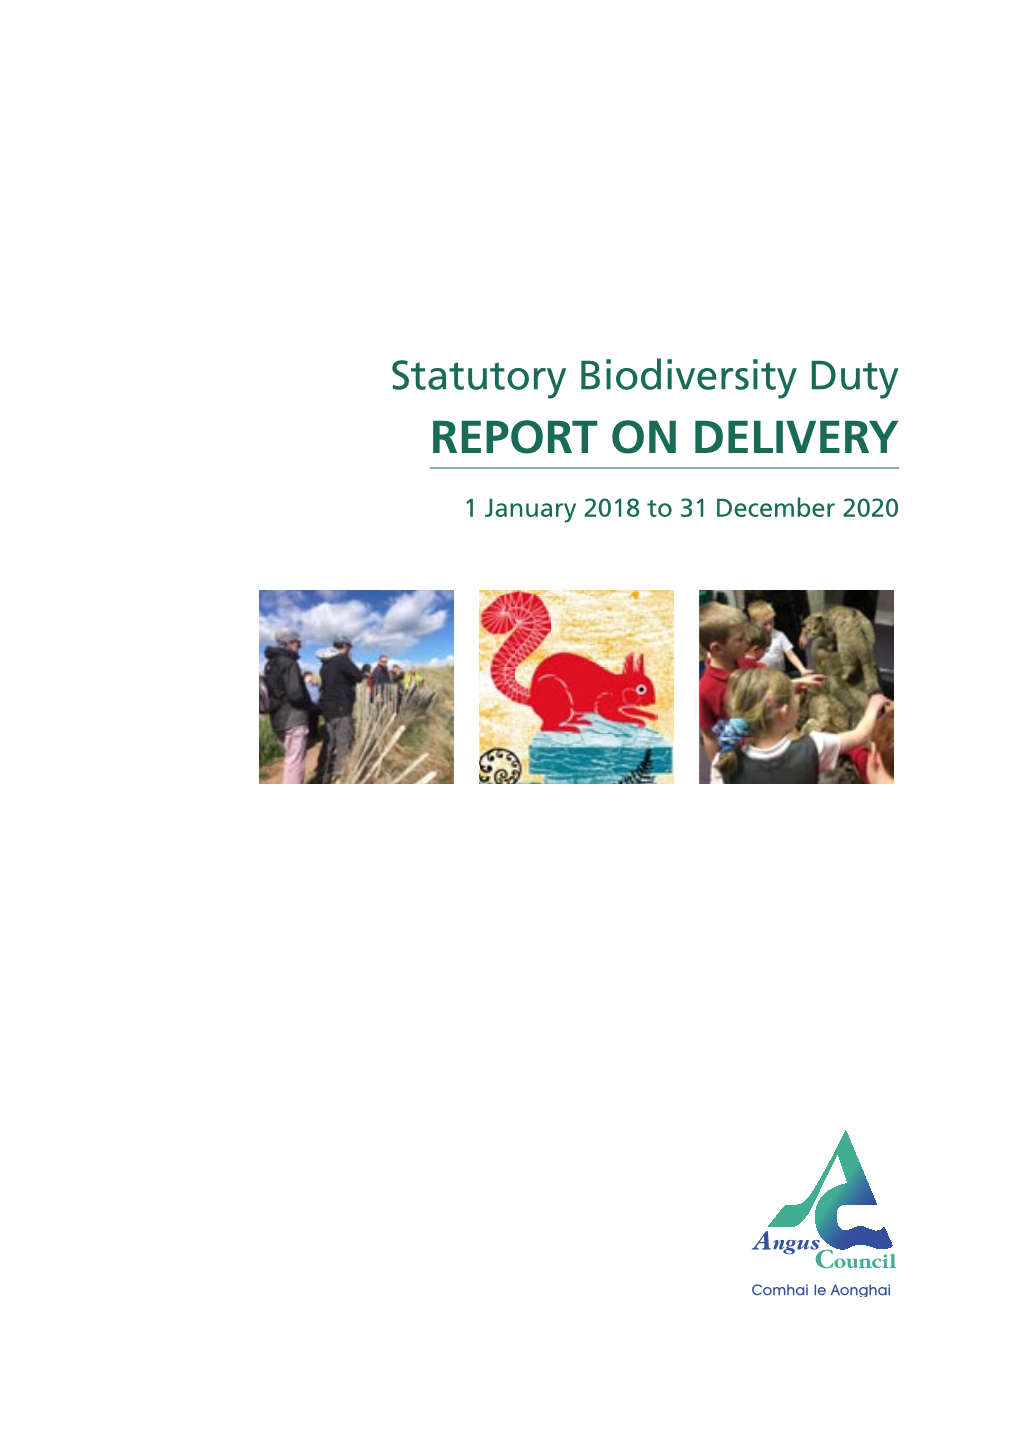 Statutory Biodiversity Duty Report 2018-2020